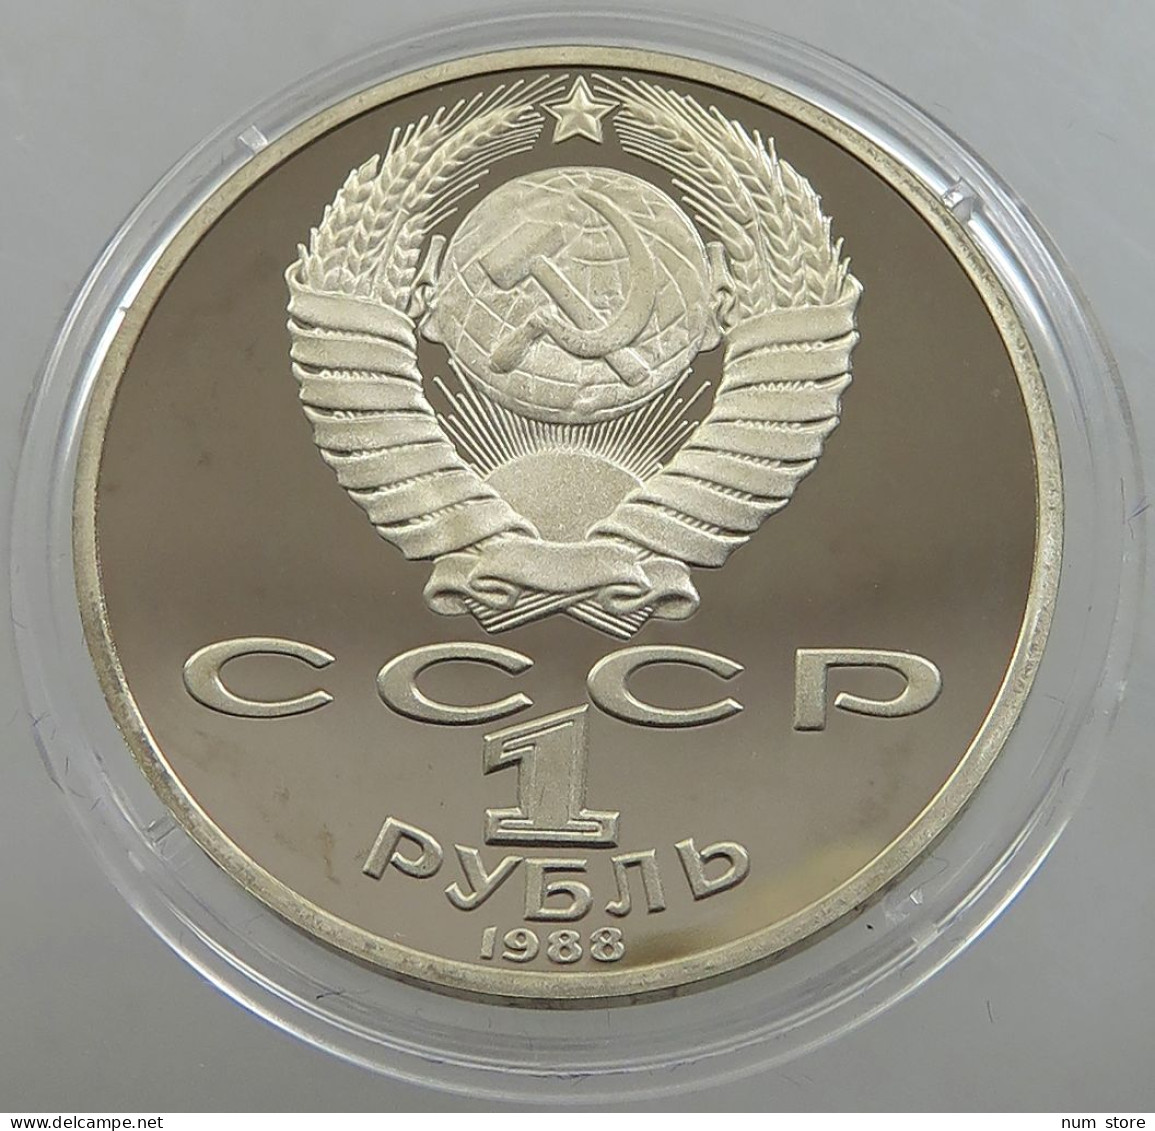 RUSSIA USSR 1 ROUBLE 1988 TOLSTOI #sm14 0519 - Russia